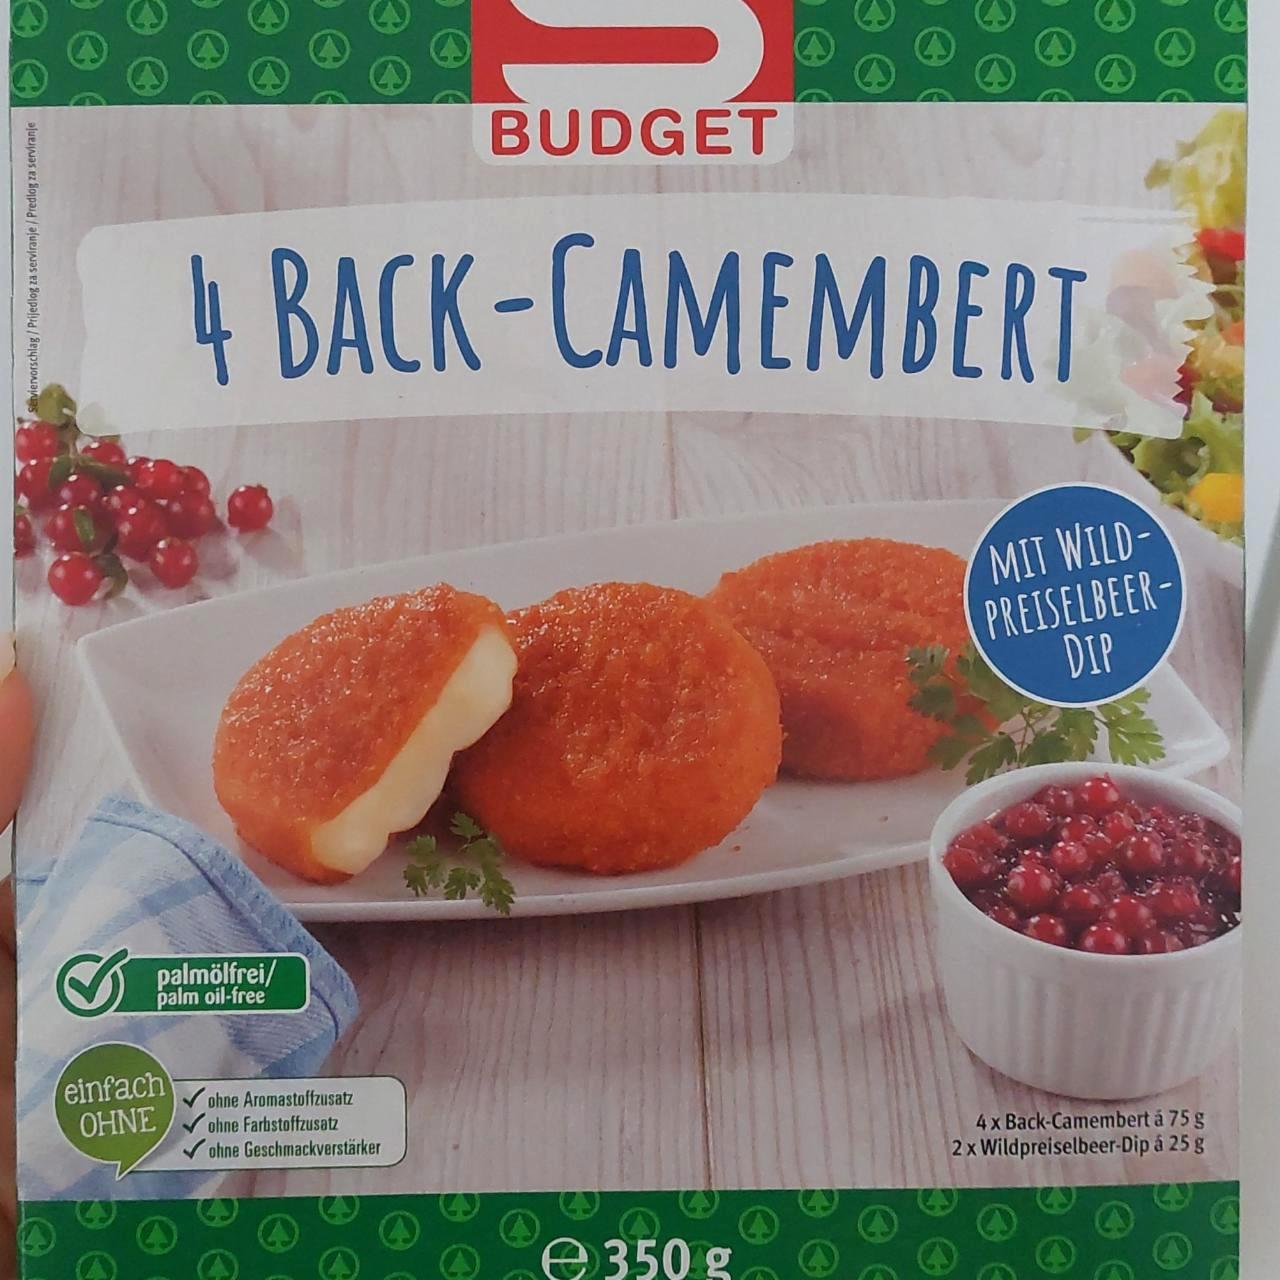 Képek - 4 Back Camembert S Budget